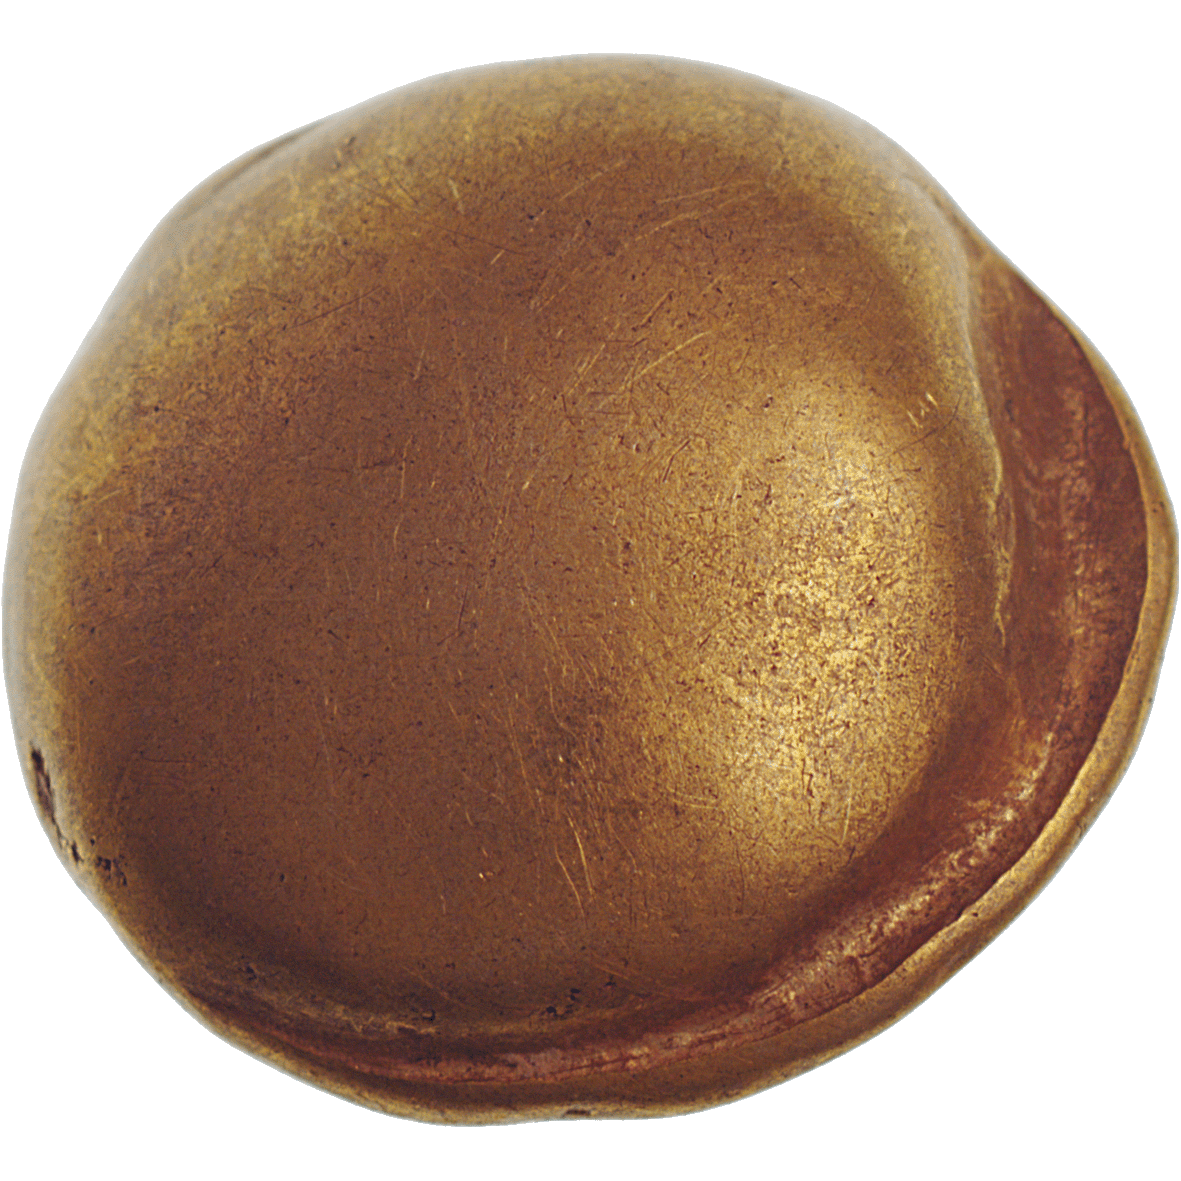 Eastern Middle Gaul, Senones?, Spherical Stater (reverse)